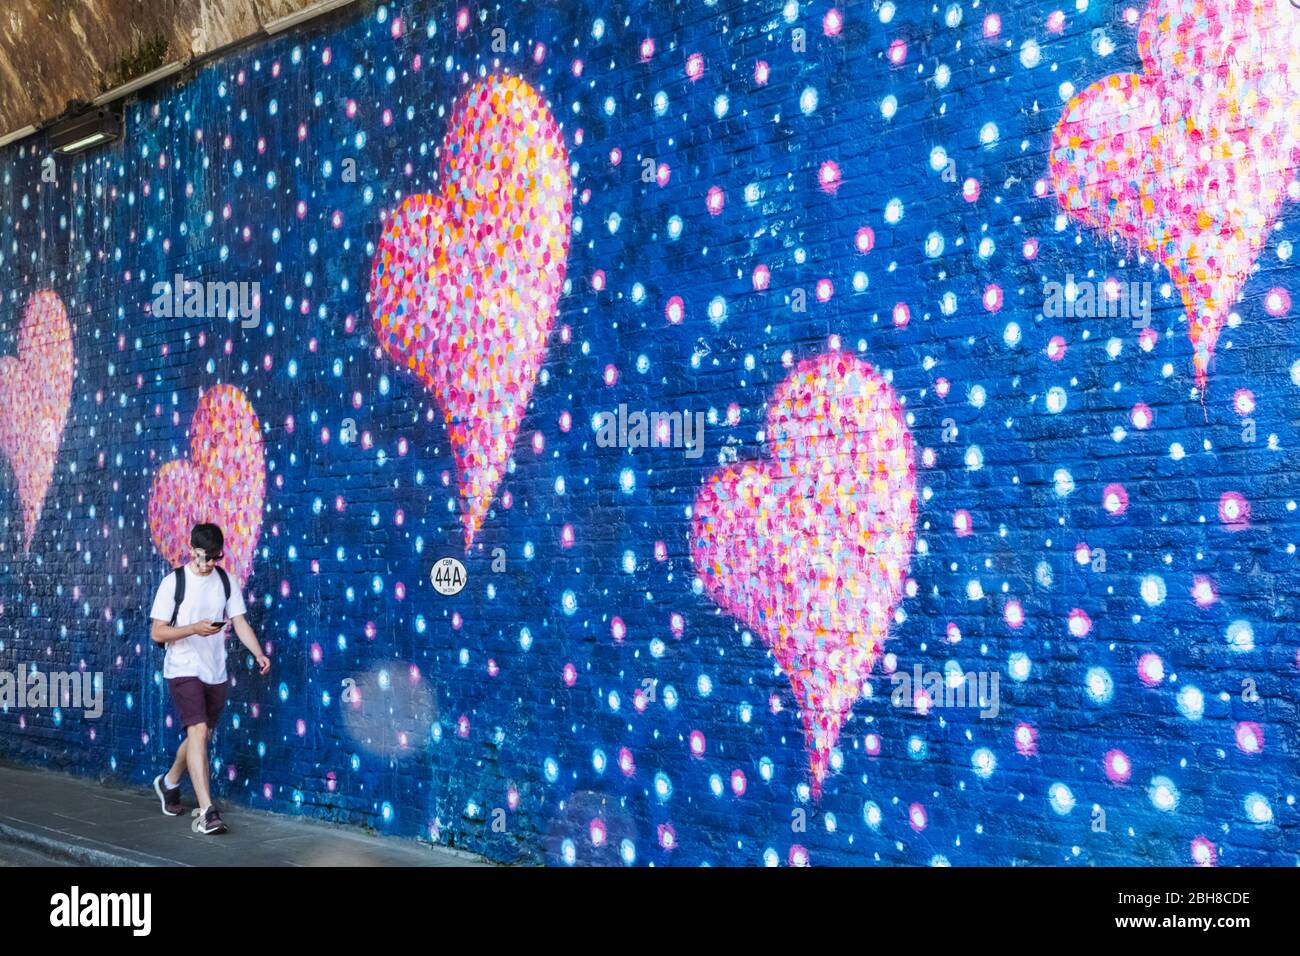 England, London, Southwark, Street Art depicting Hearts Stock Photo